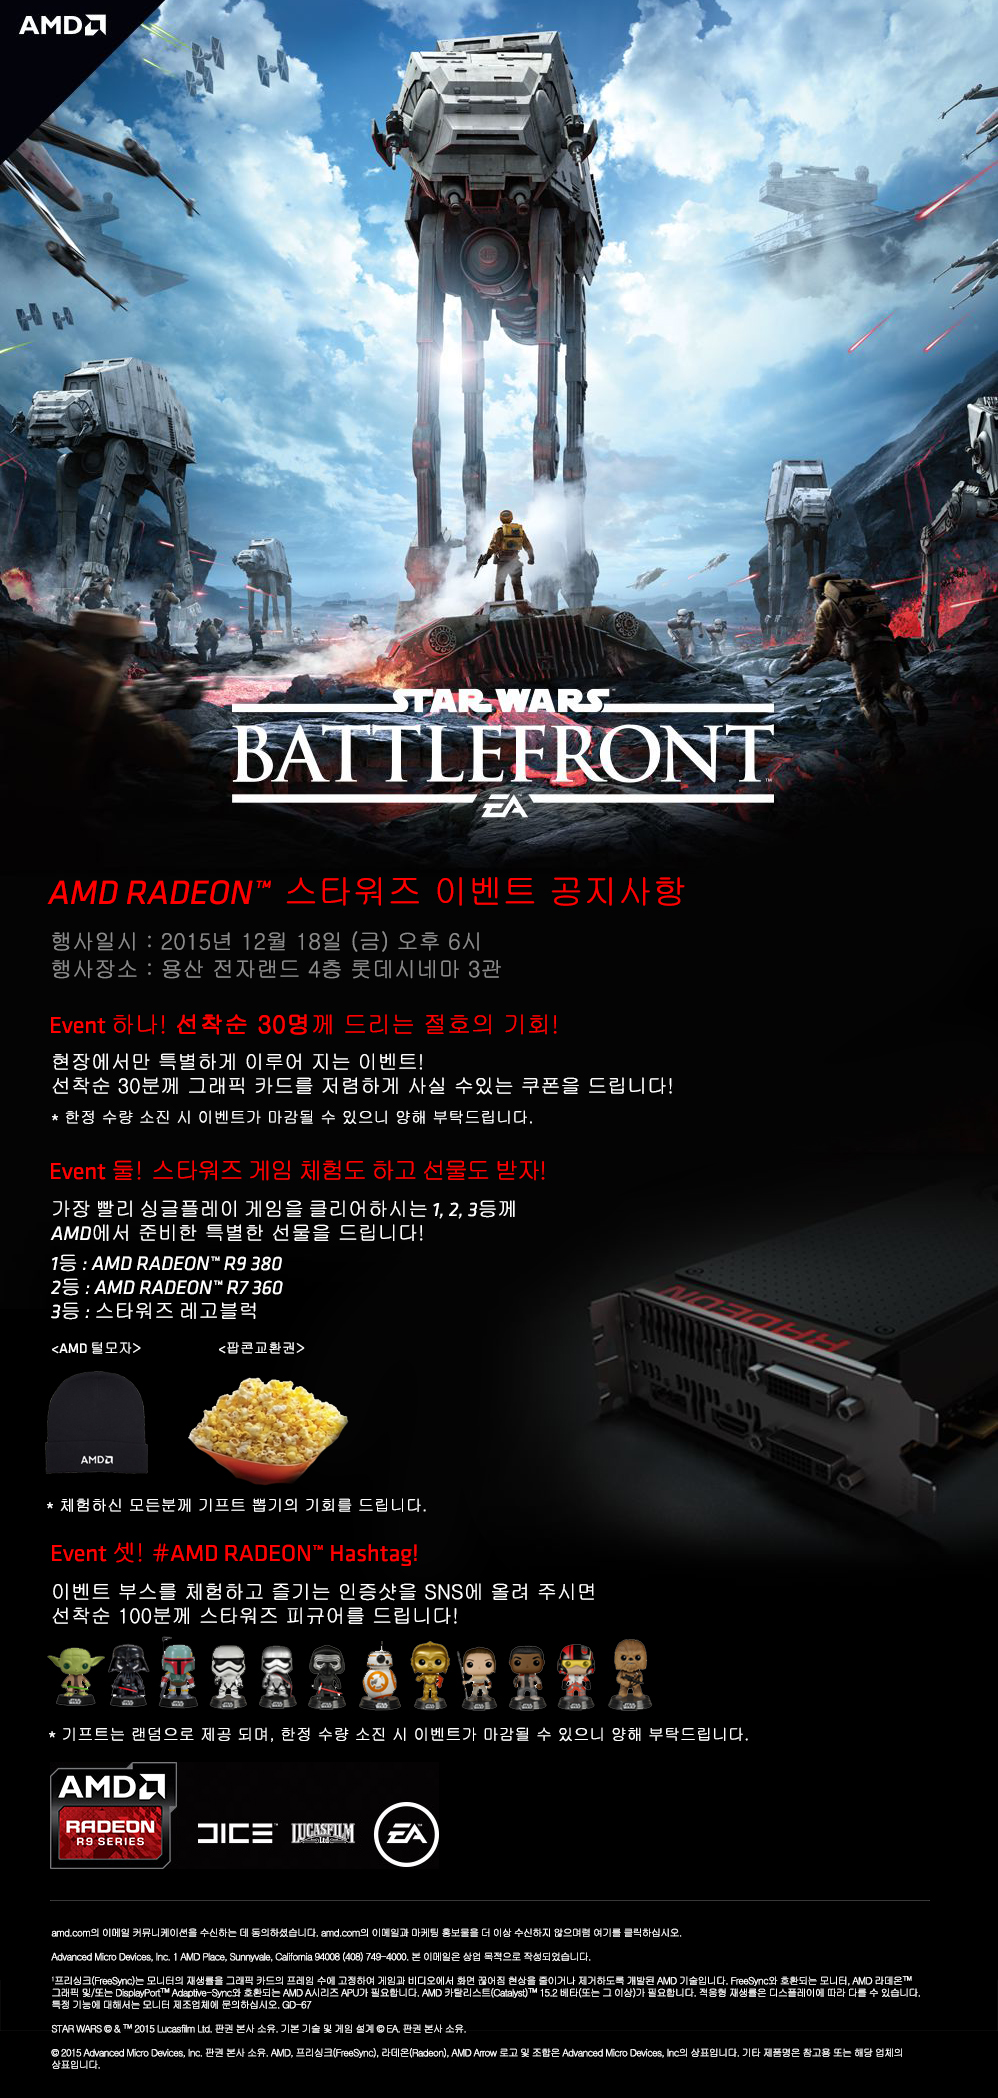 AMD EVENT 공지_ver3.jpg